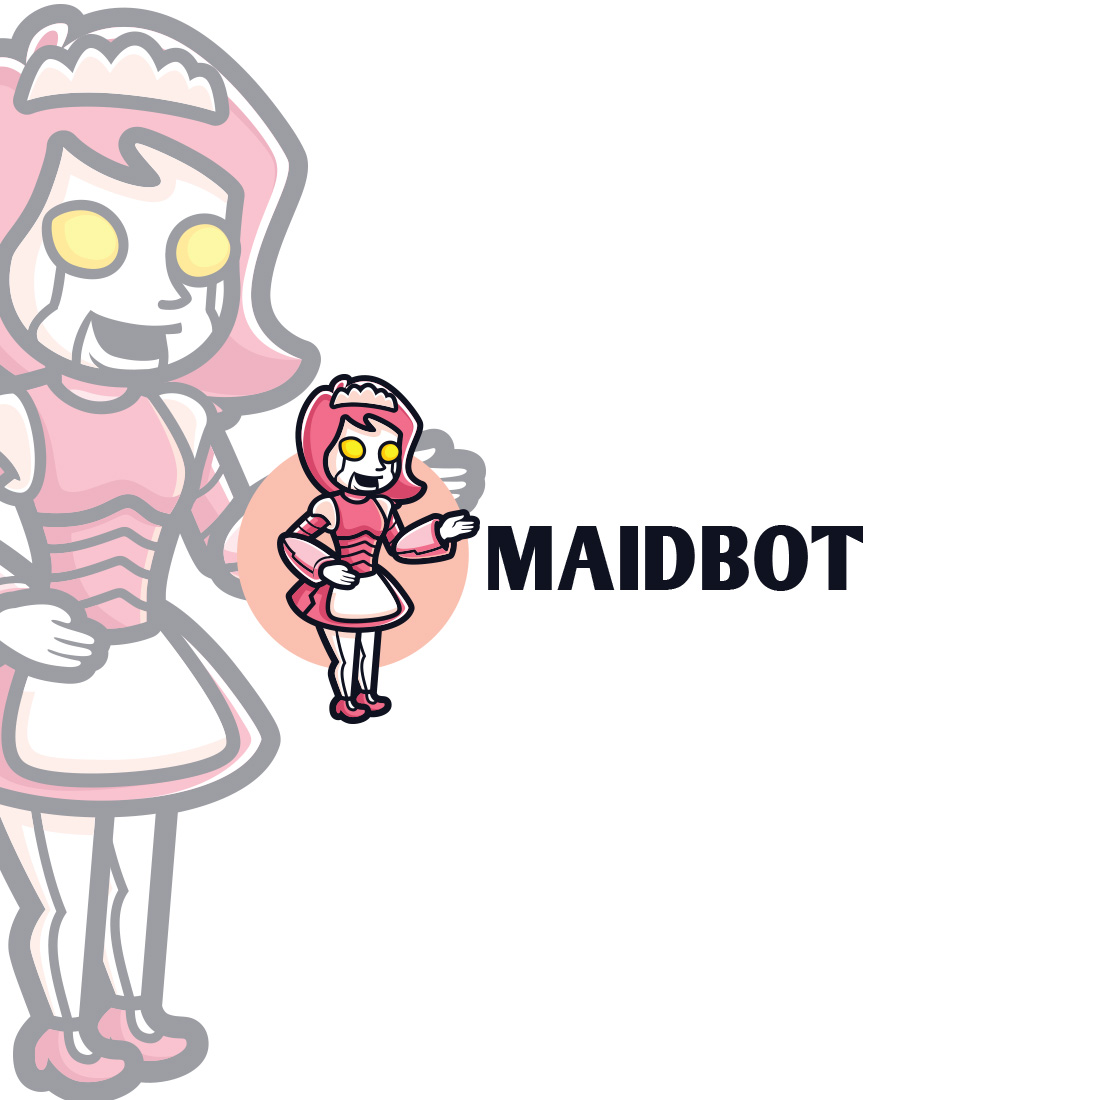 Maid Robot Character Mascot Logo Design cover image.